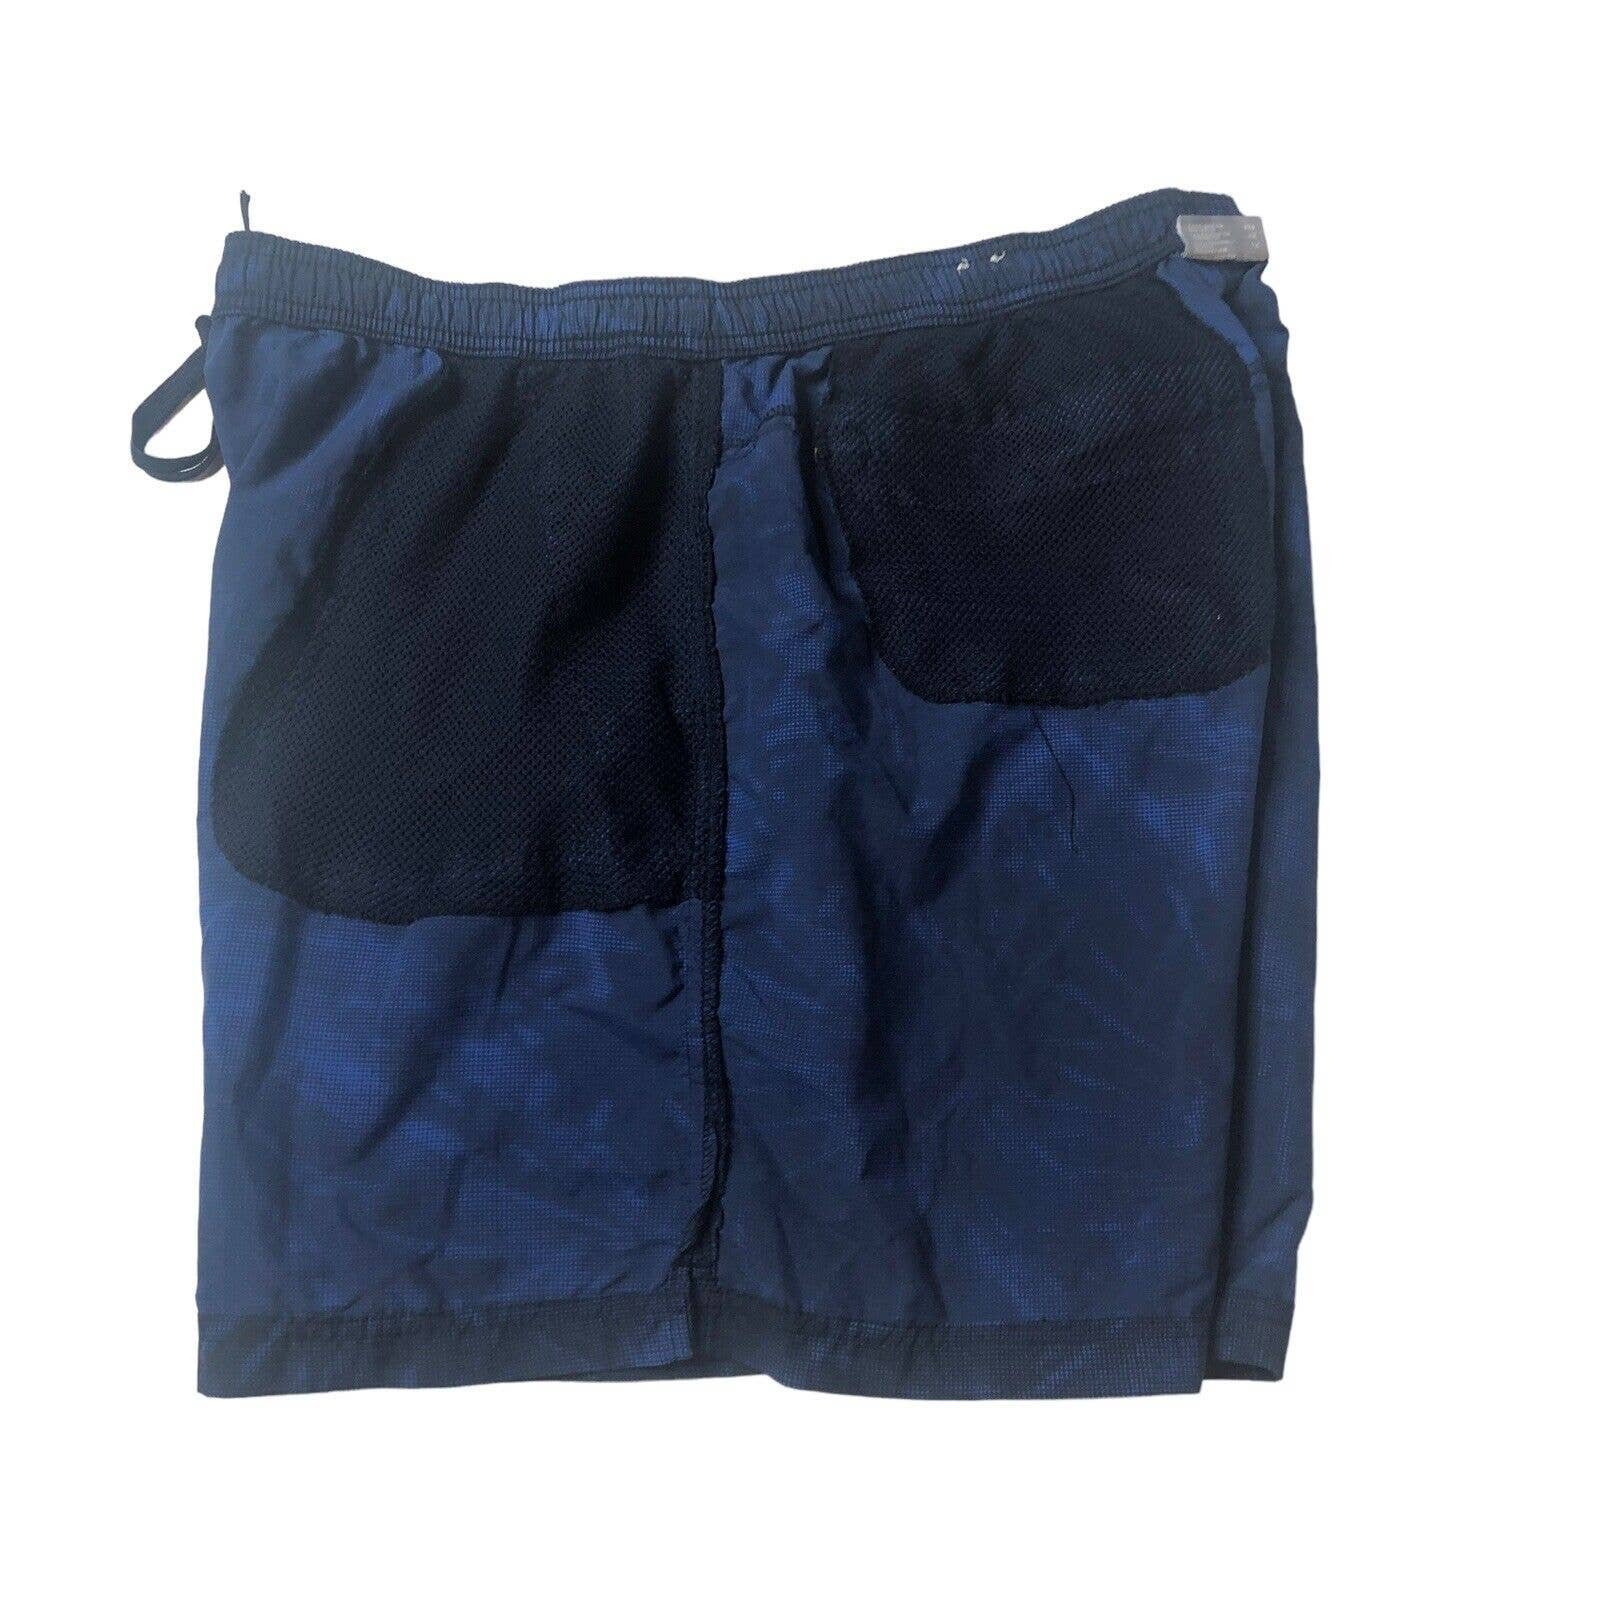 The Best Seller Columbia Sandy River II Shorts Womens Blue Sunburst Print Outdoors Hiking Sz 1X PQJgc1x4X Zero Profit 